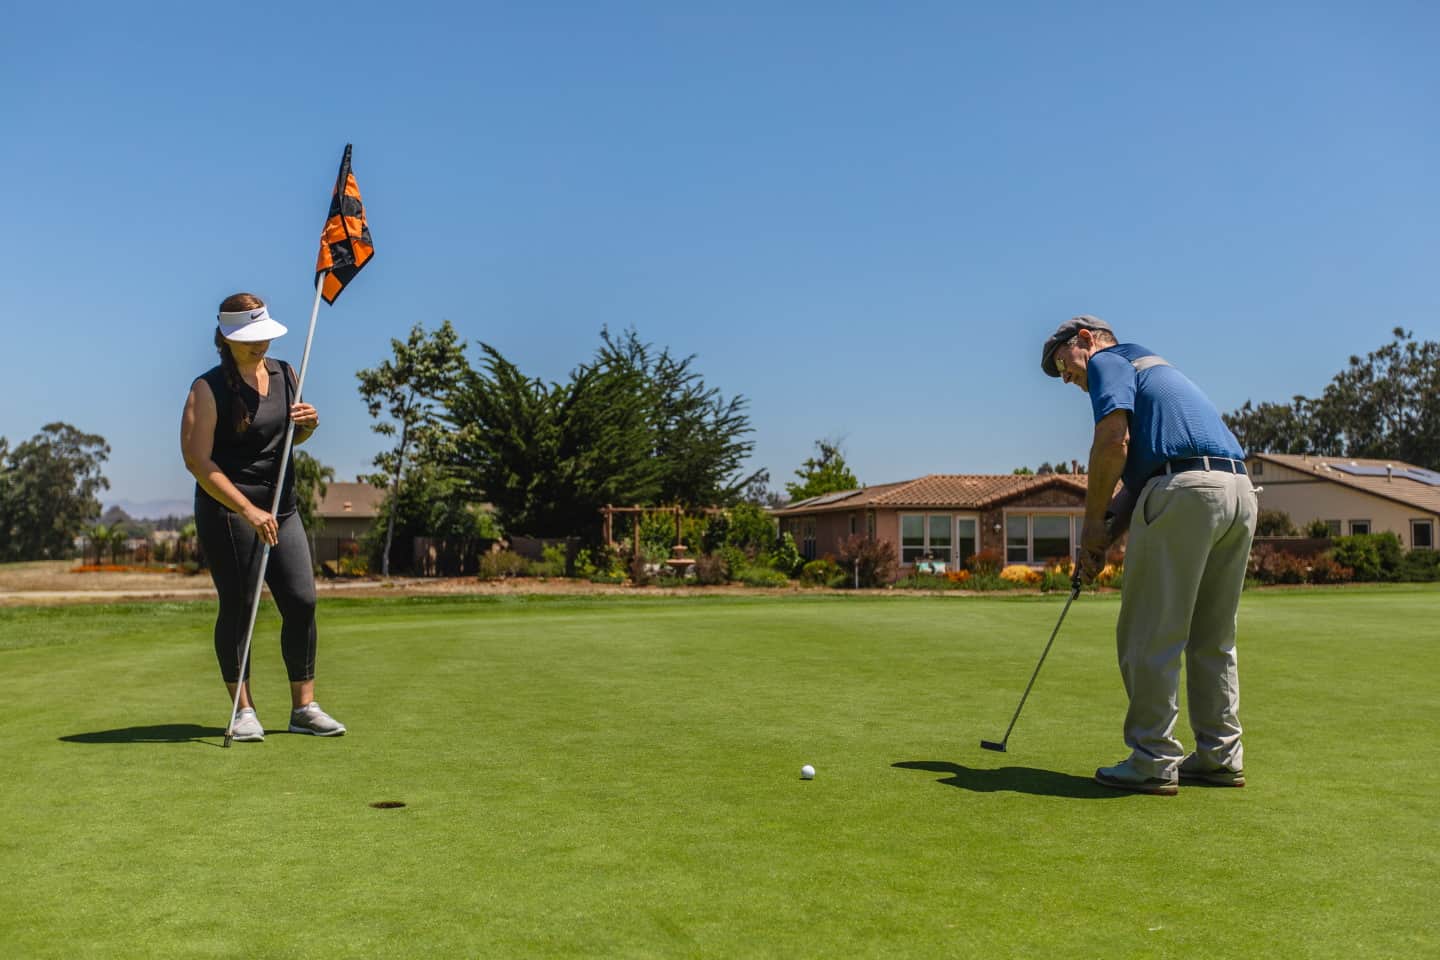 Golf at Blacklake in Nipomo, CA